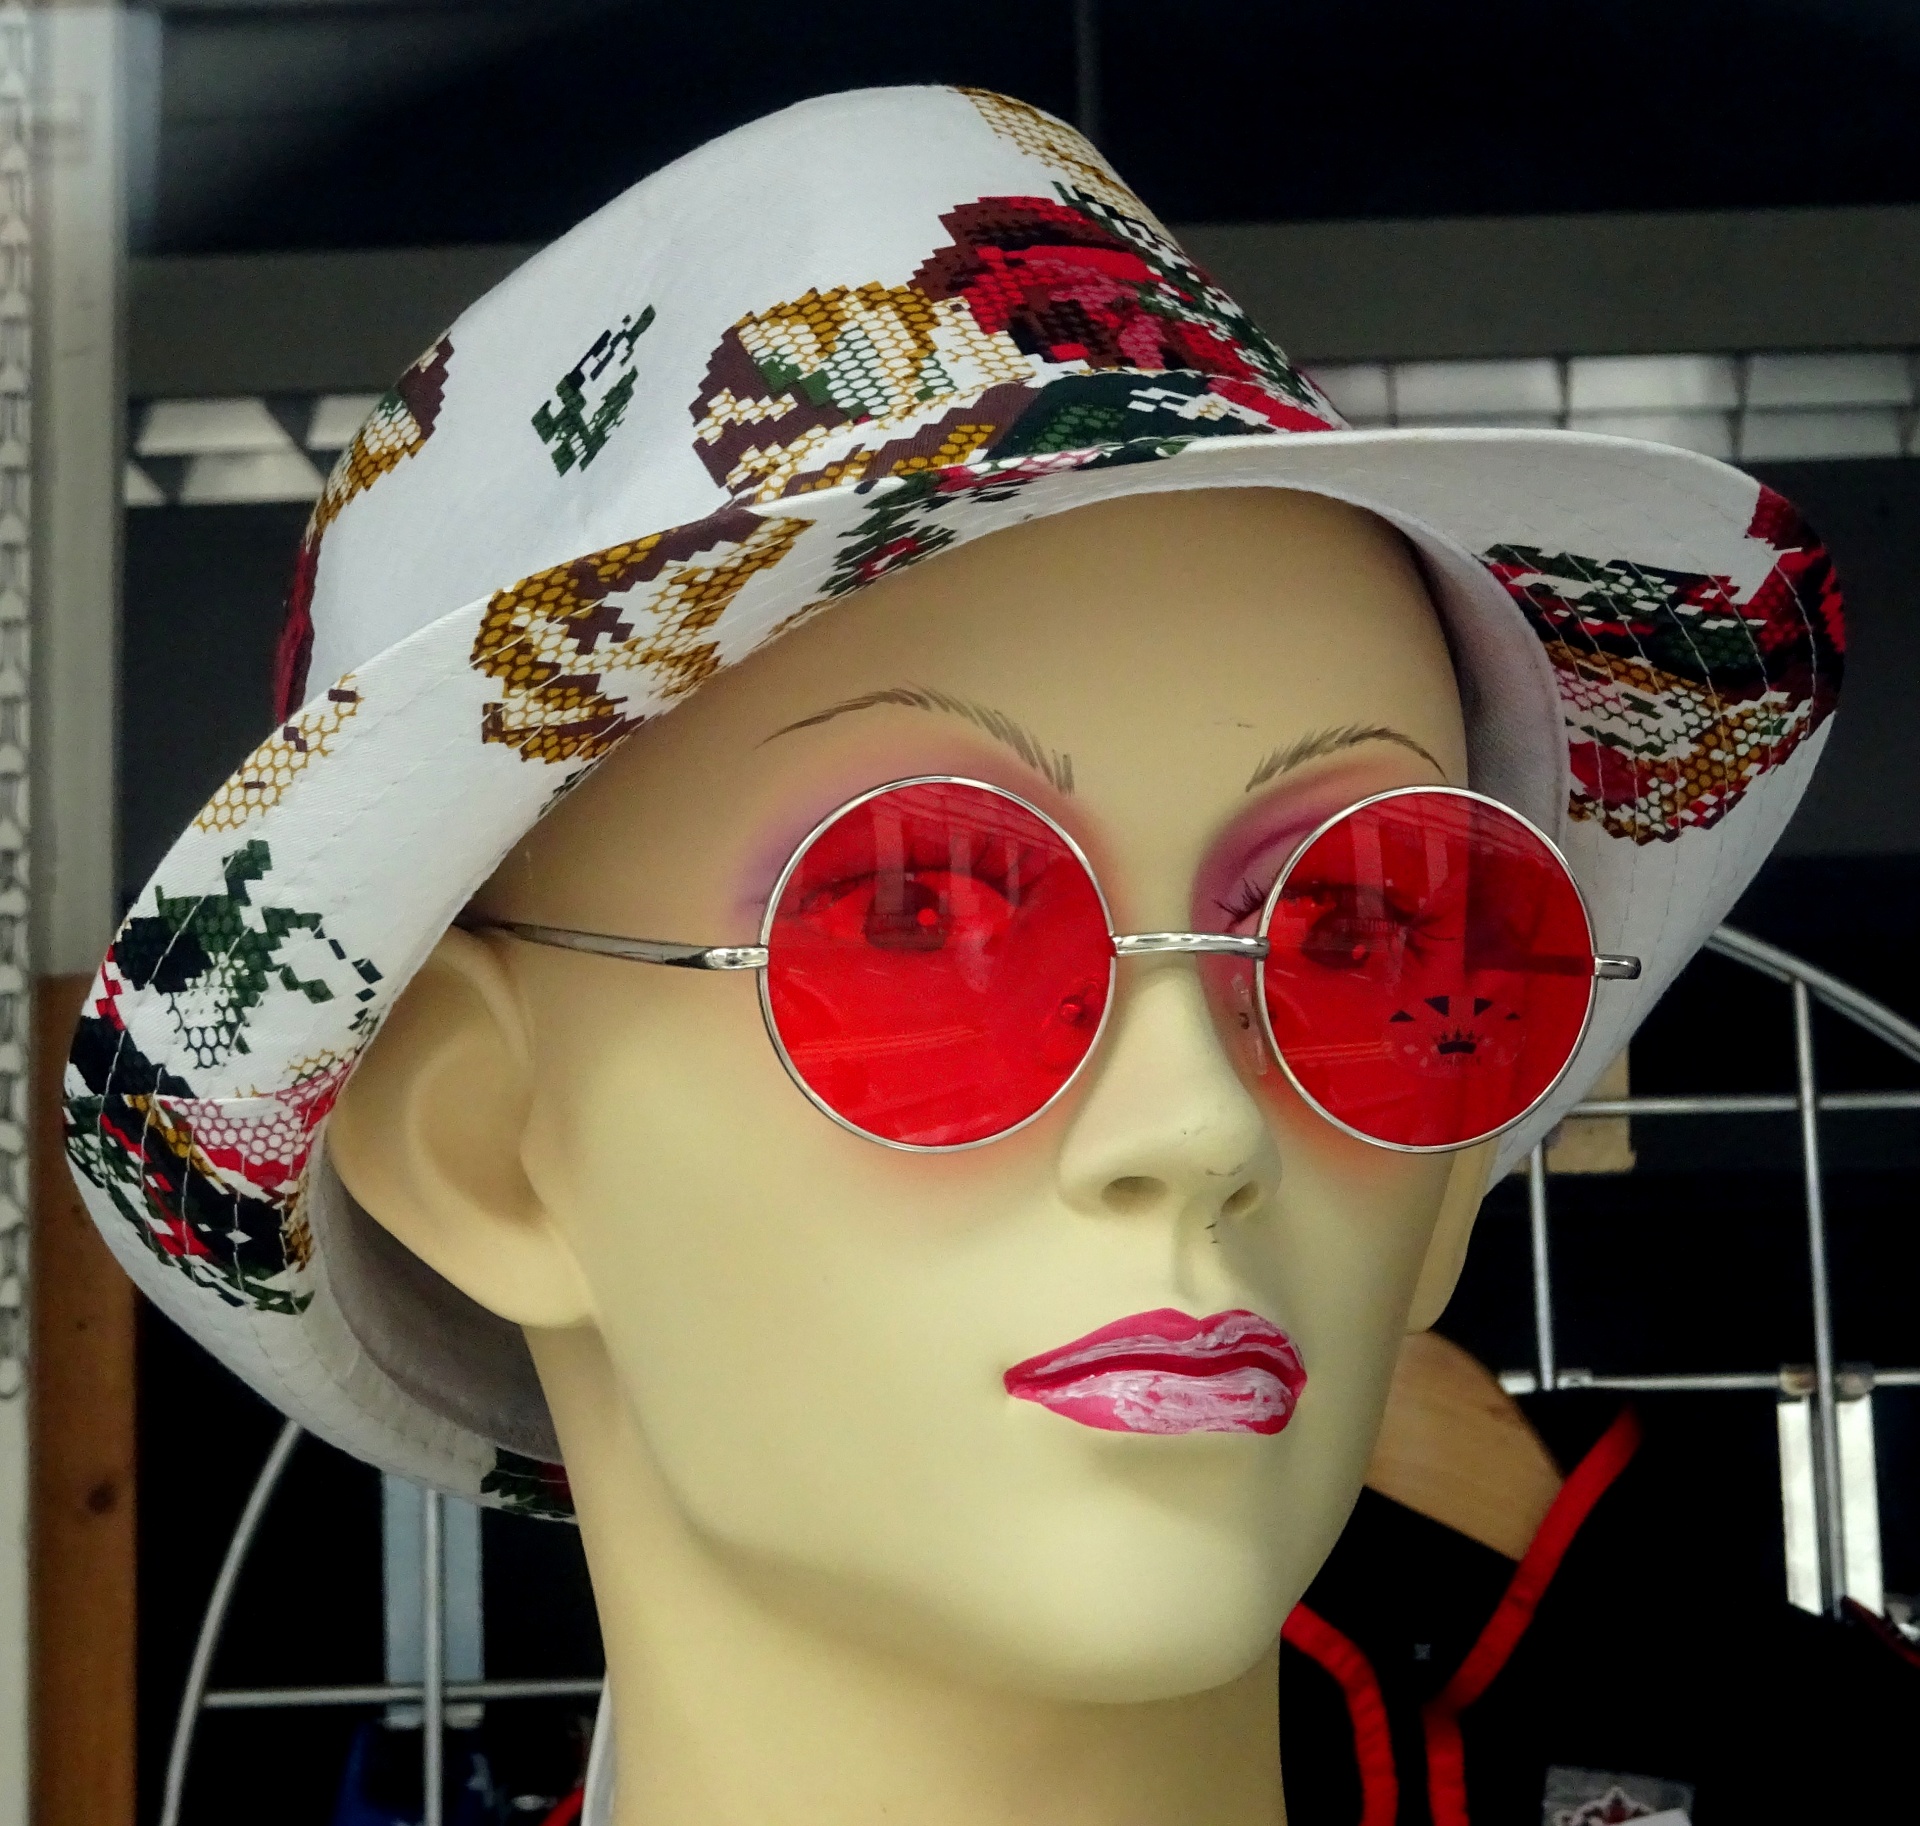 Mannequin Wearing Sunglasses